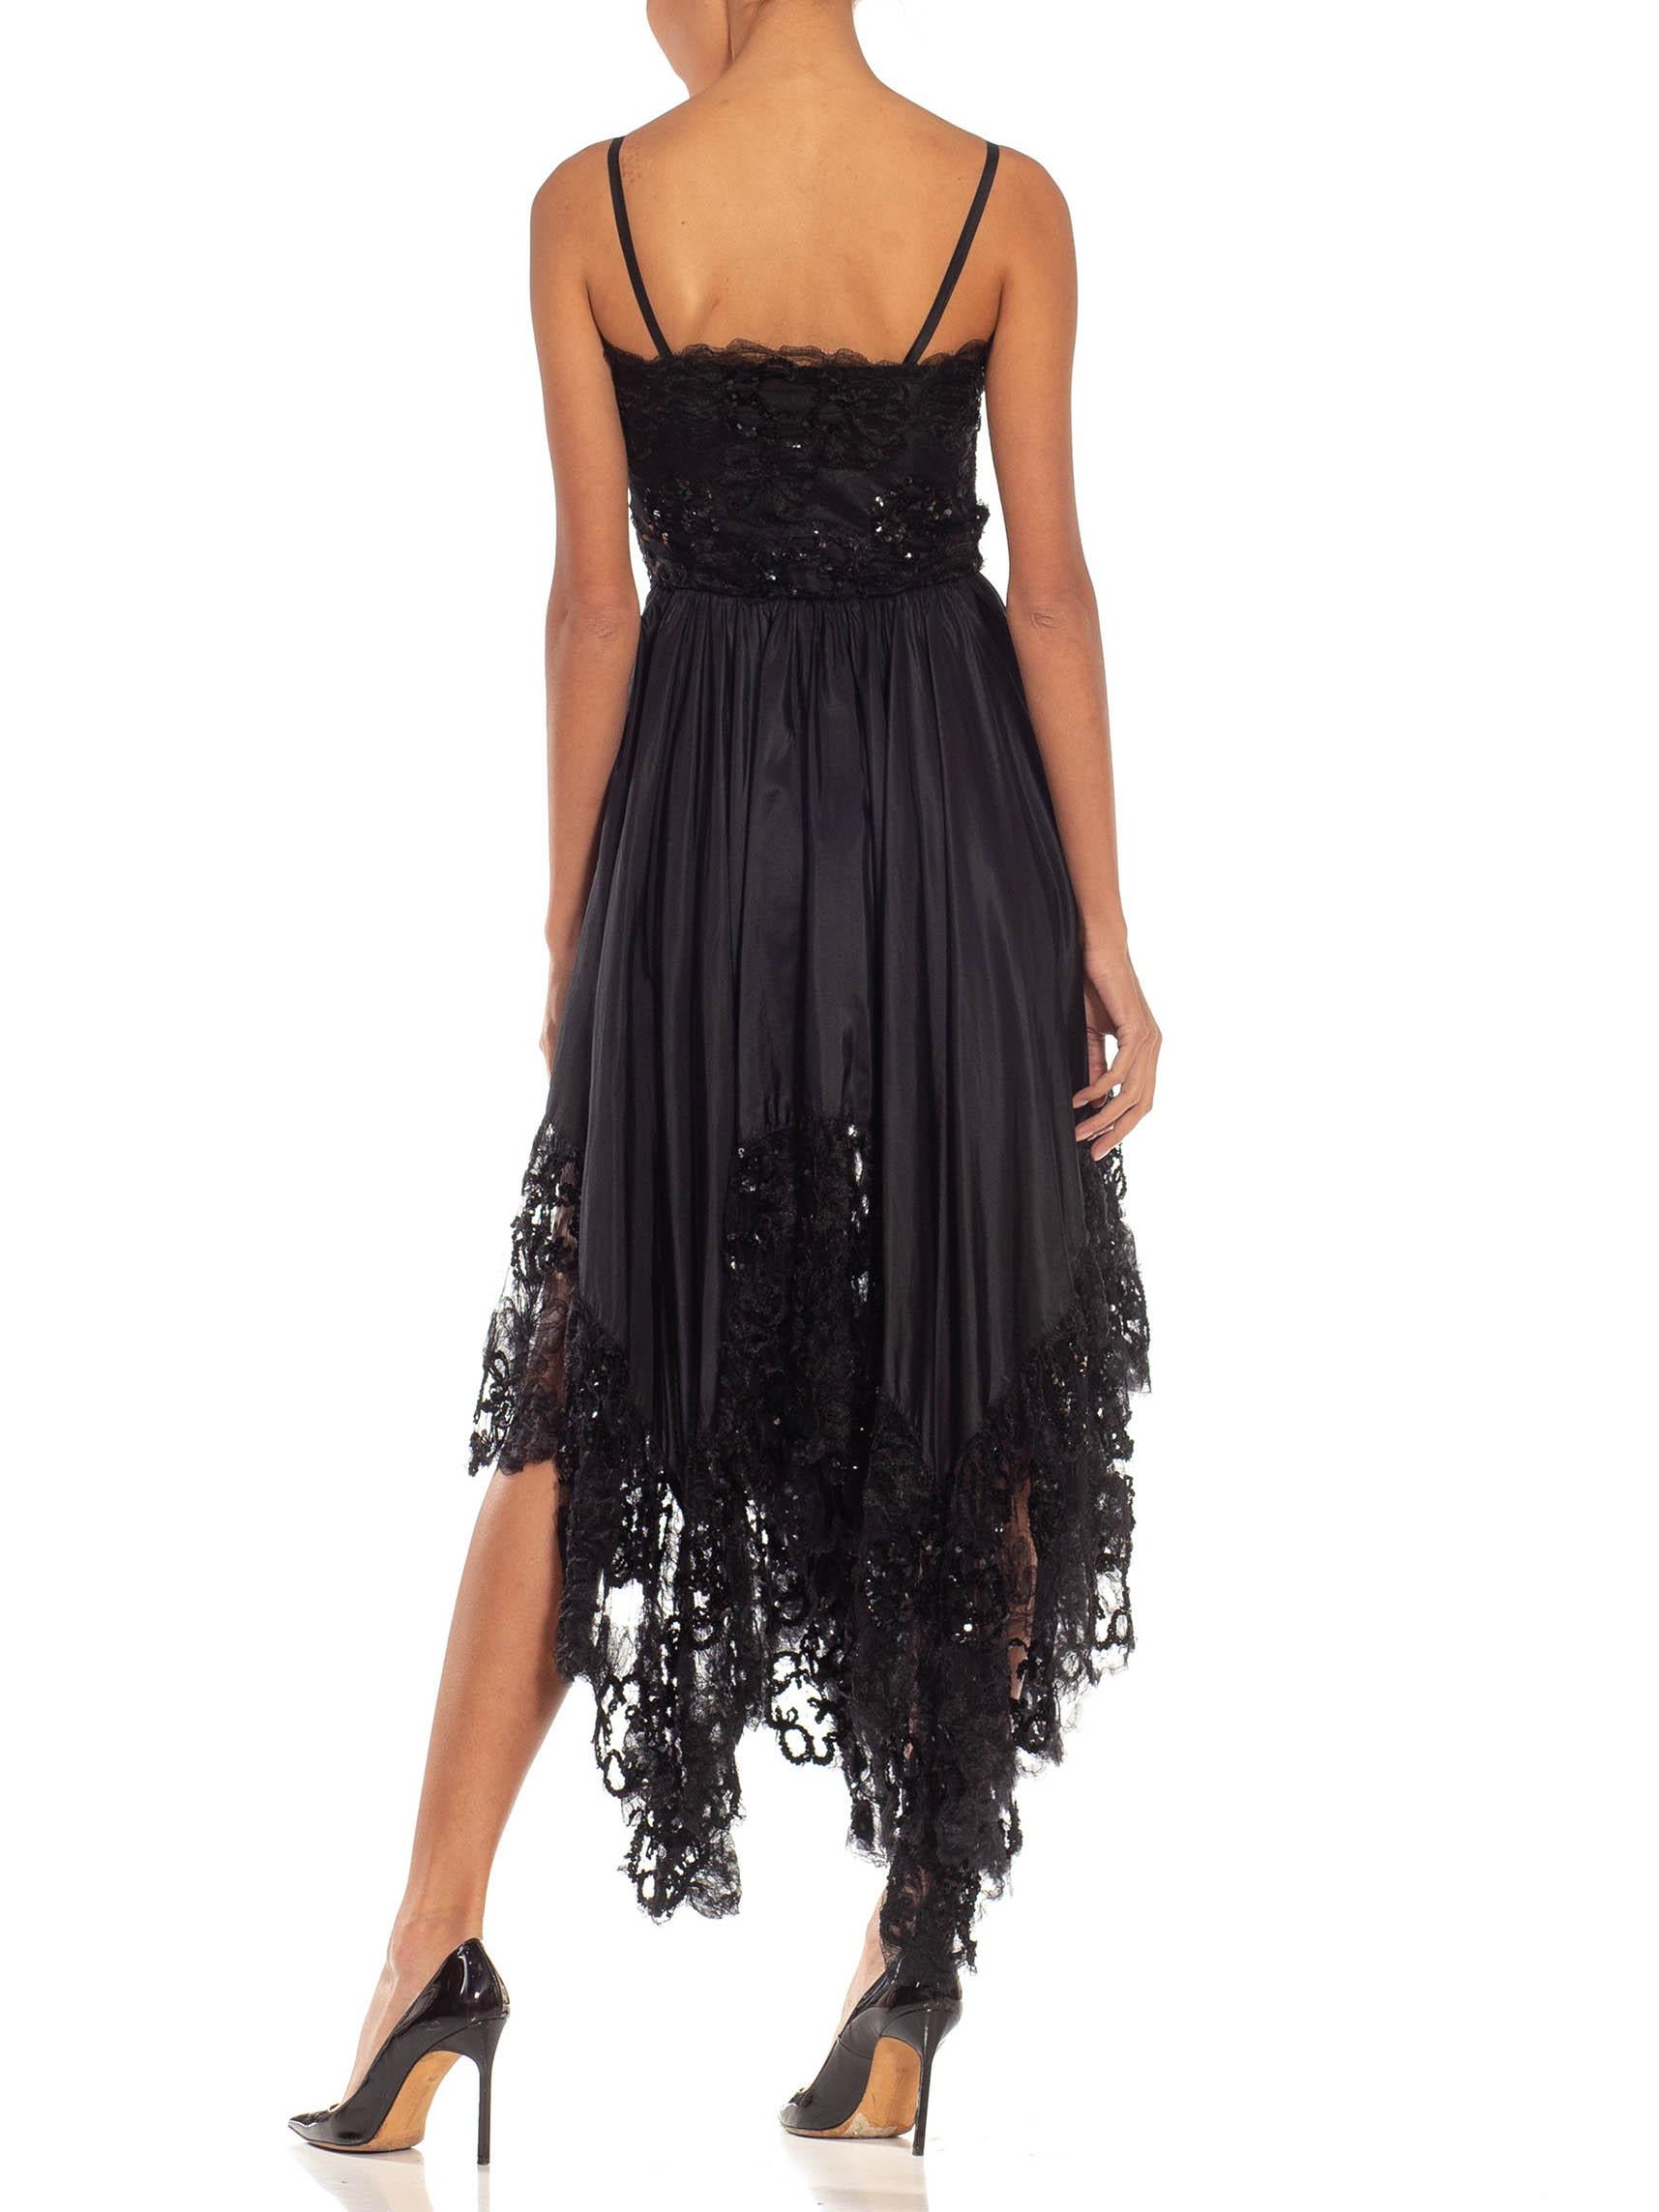 1970S YVES SAINT LAURENT Black Sequined Chiffon & Lace Dress For Sale 3